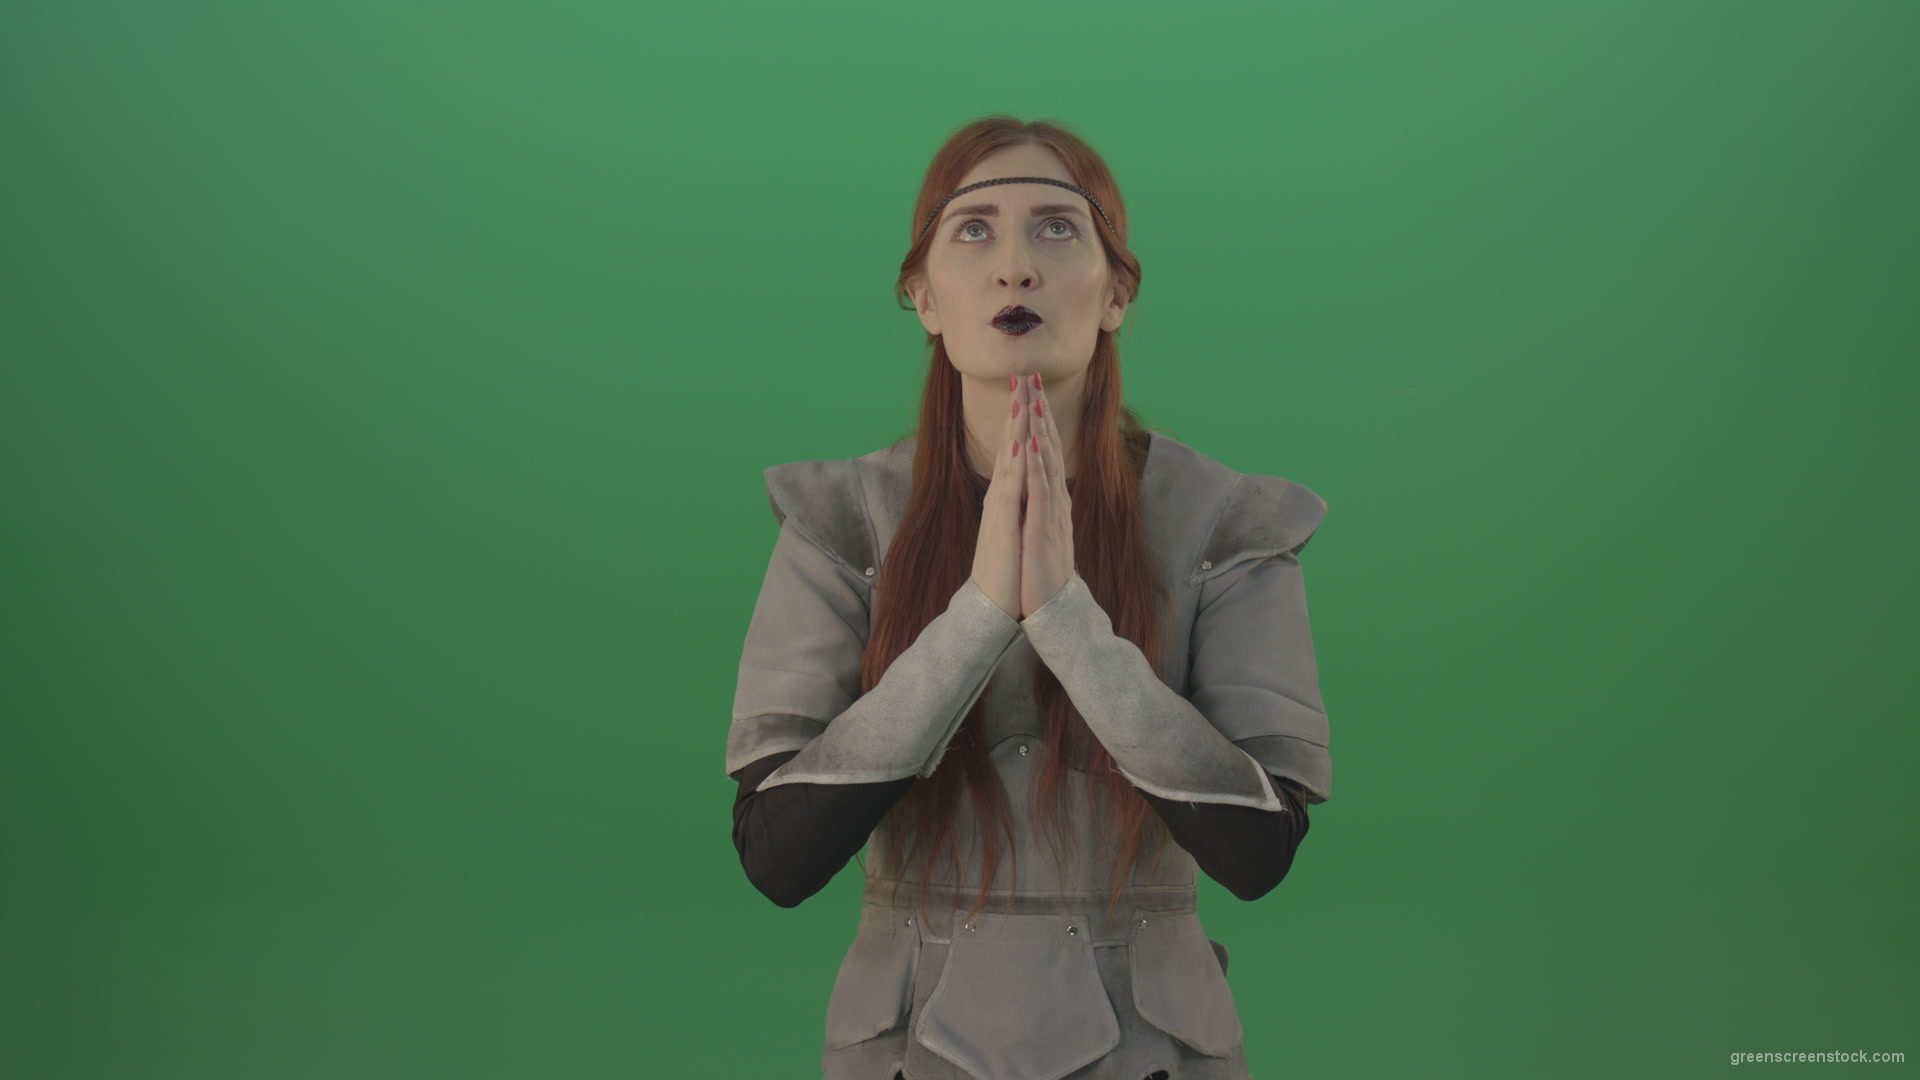 Red-hair-girl-praying-god-in-medieval-warrior-costume-in-green-screen-studio_009 Green Screen Stock